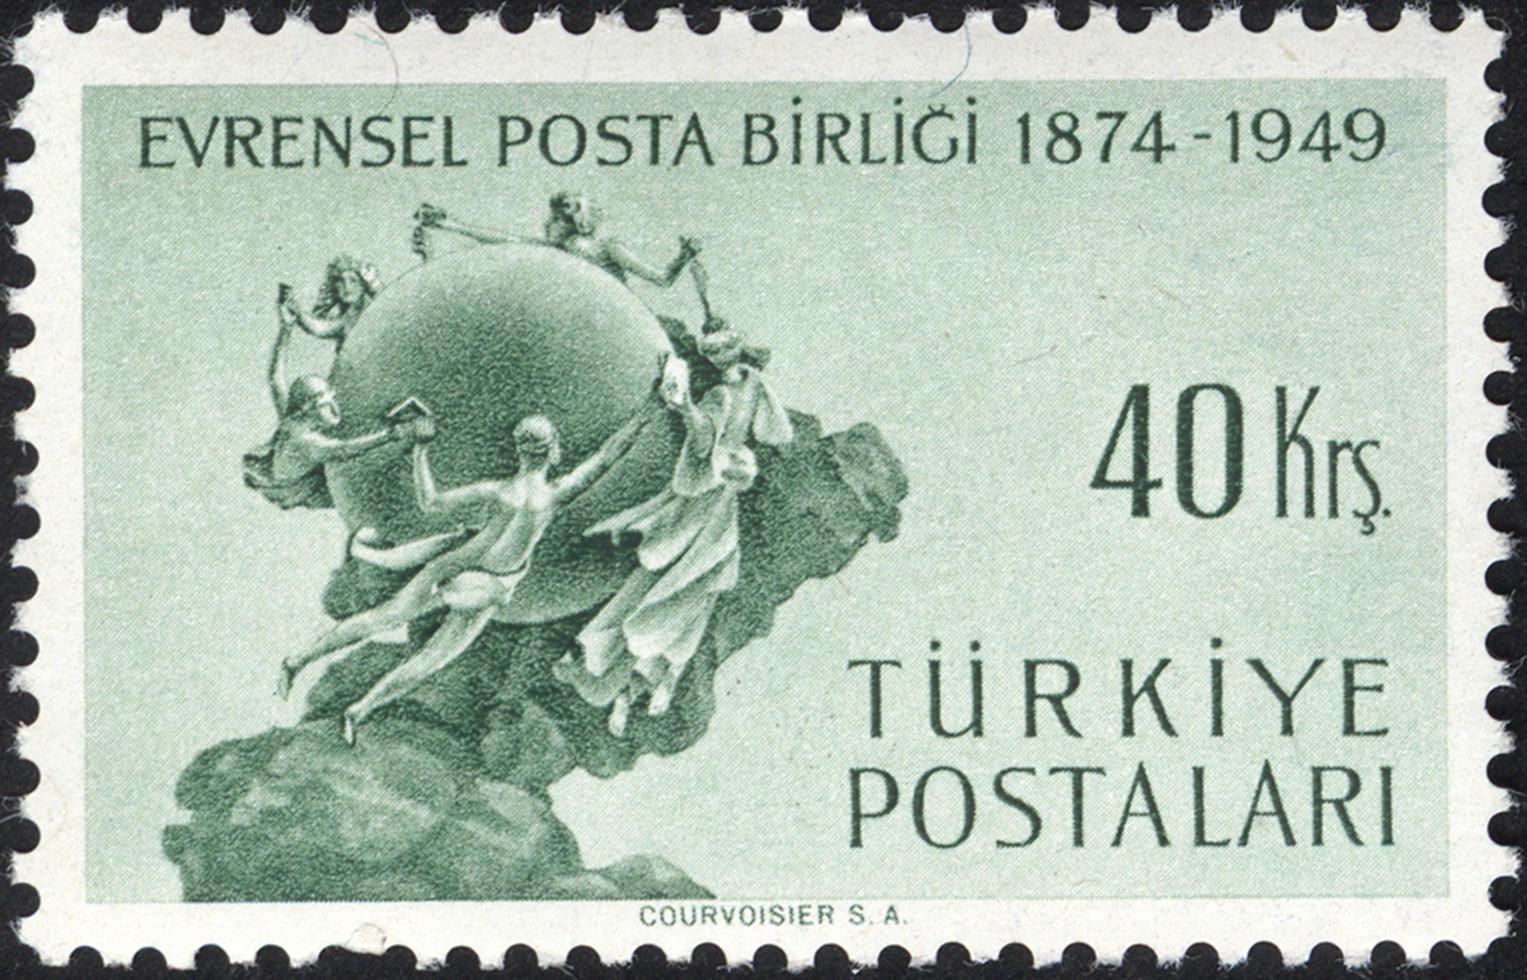 Turquie, 2021 - timbre-poste de Turquie vintage photo